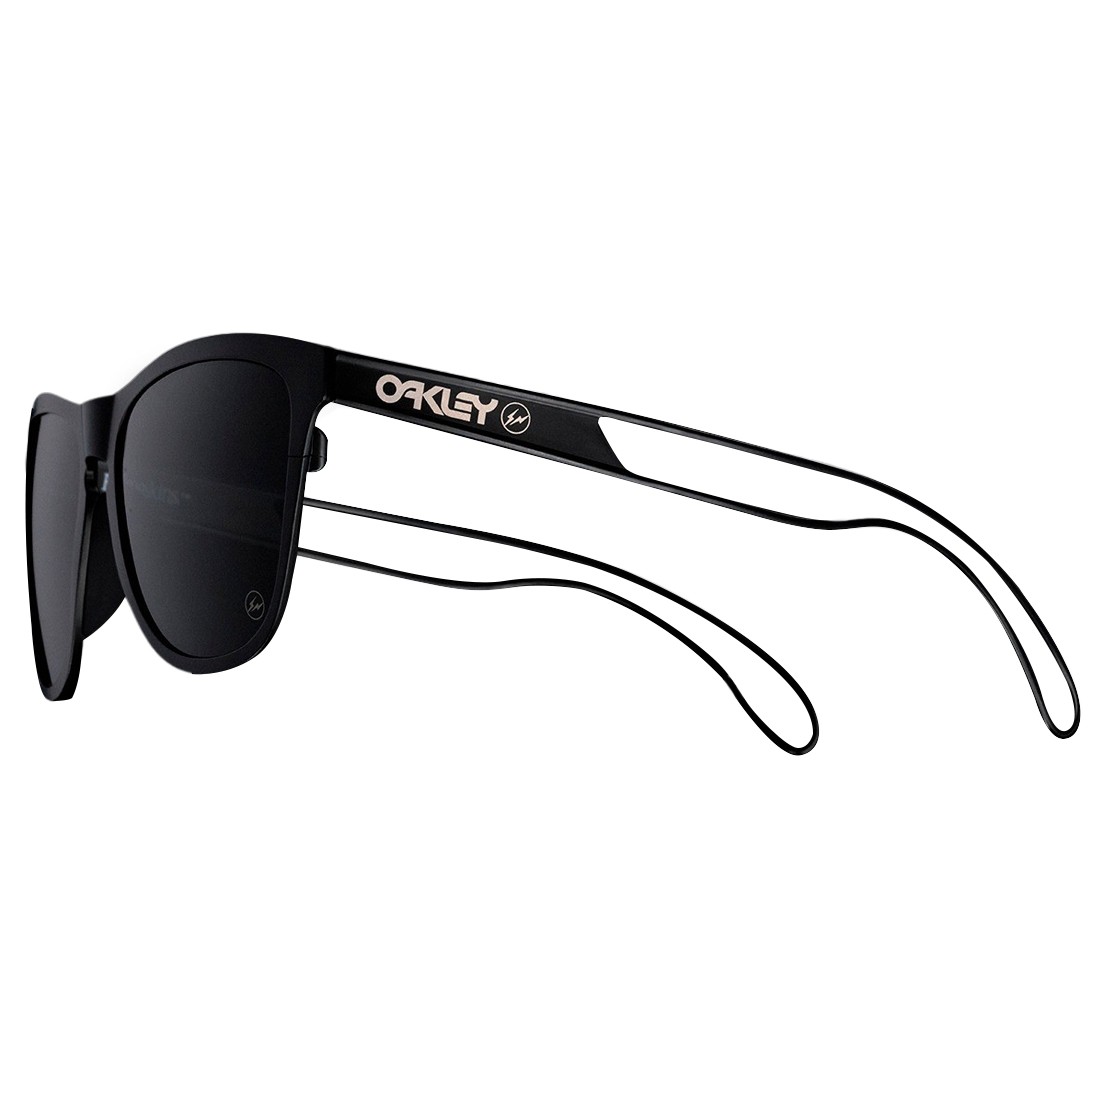 Lapima round-frame sunglasses